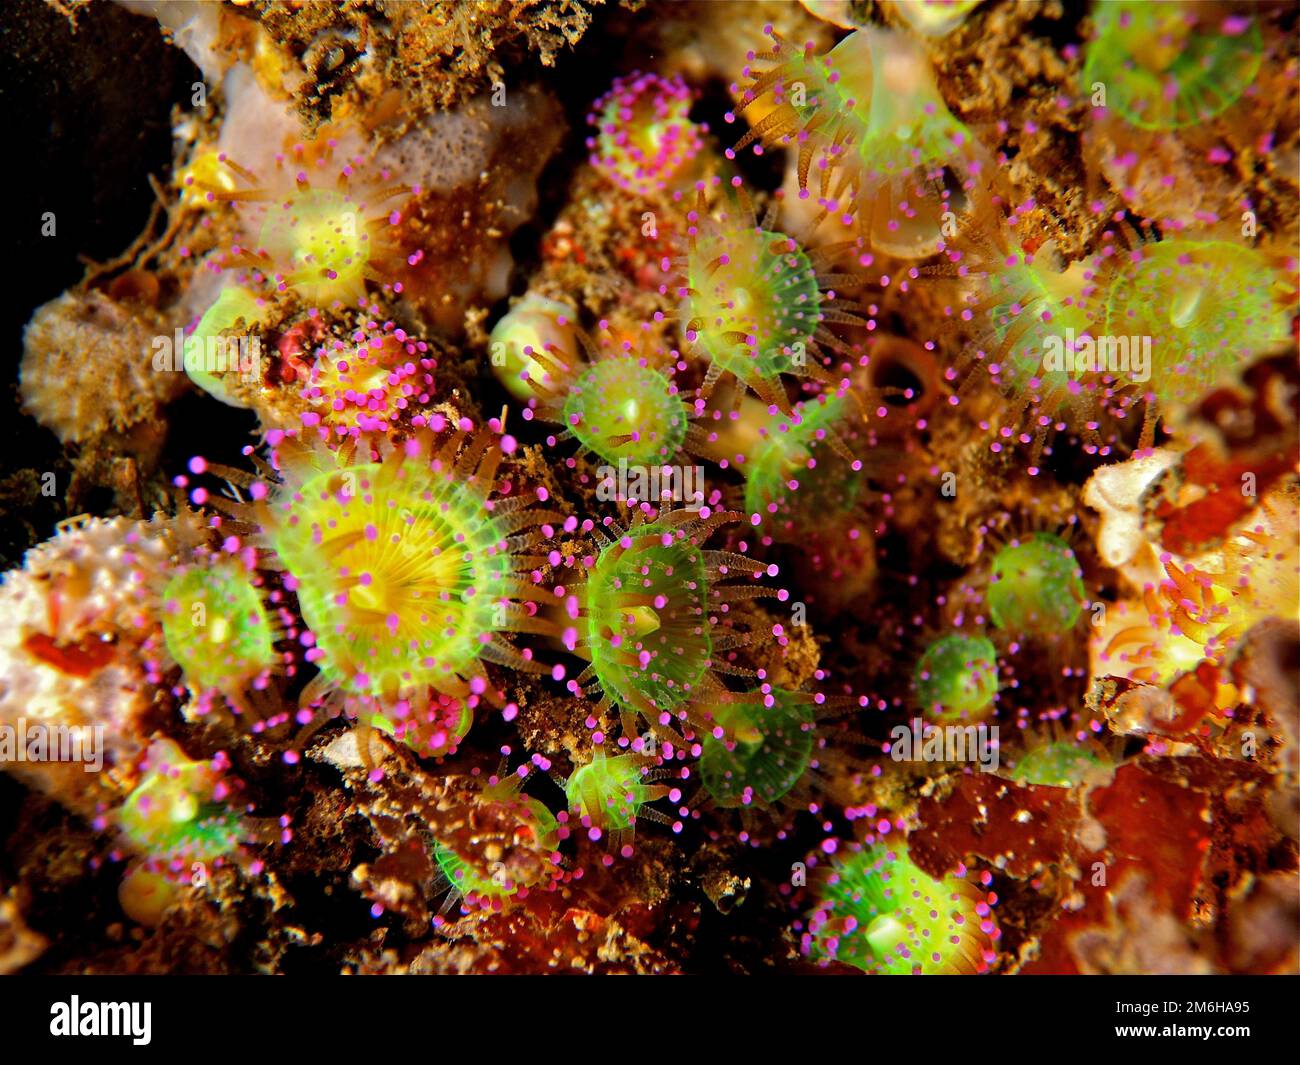 Green jewel anemone (Corynactis viridis) Sea anemone. Dive site Maharees Islands, Castlegregory, Co. Kerry, Irish Sea, North Atlantic, Ireland Stock Photo